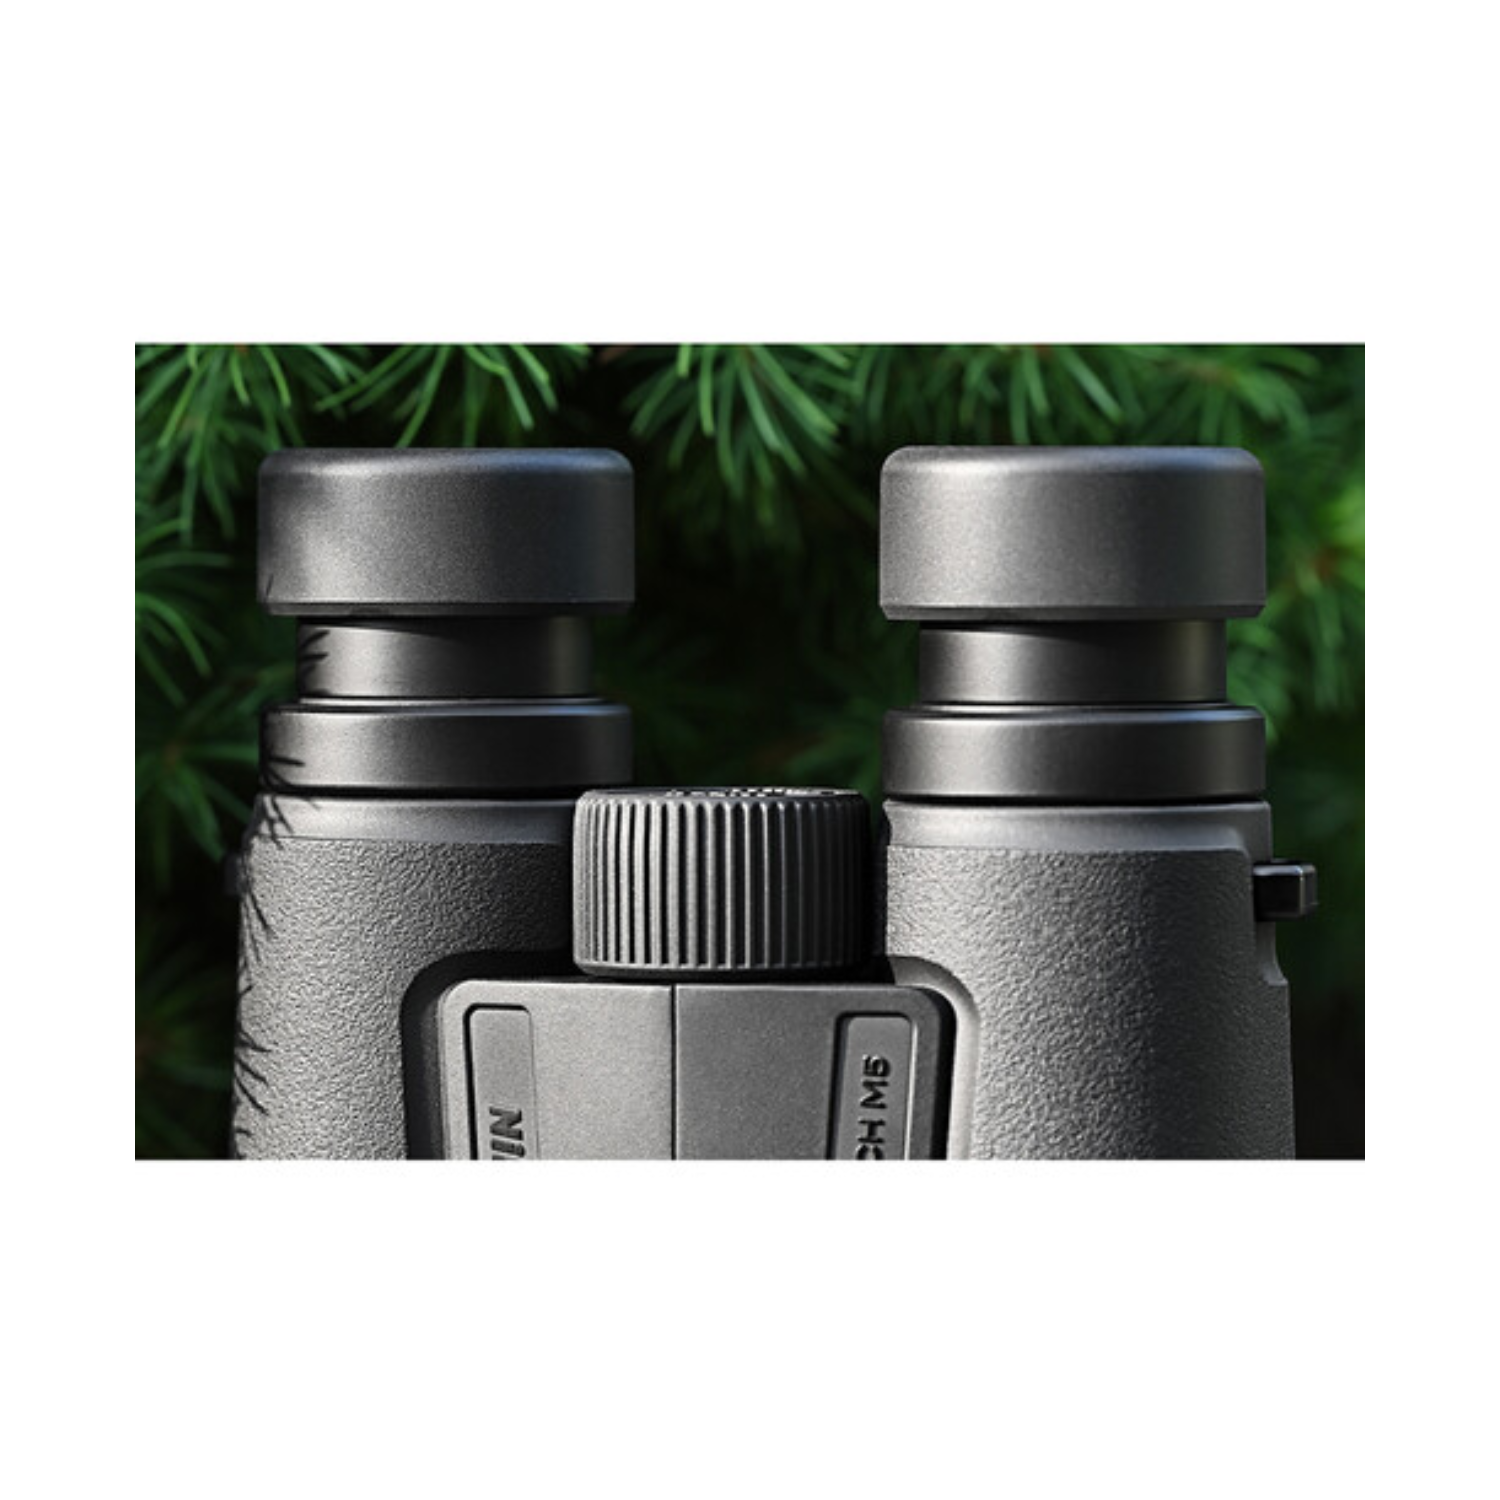 Nikon Monarch M5 10x42 Binoculars